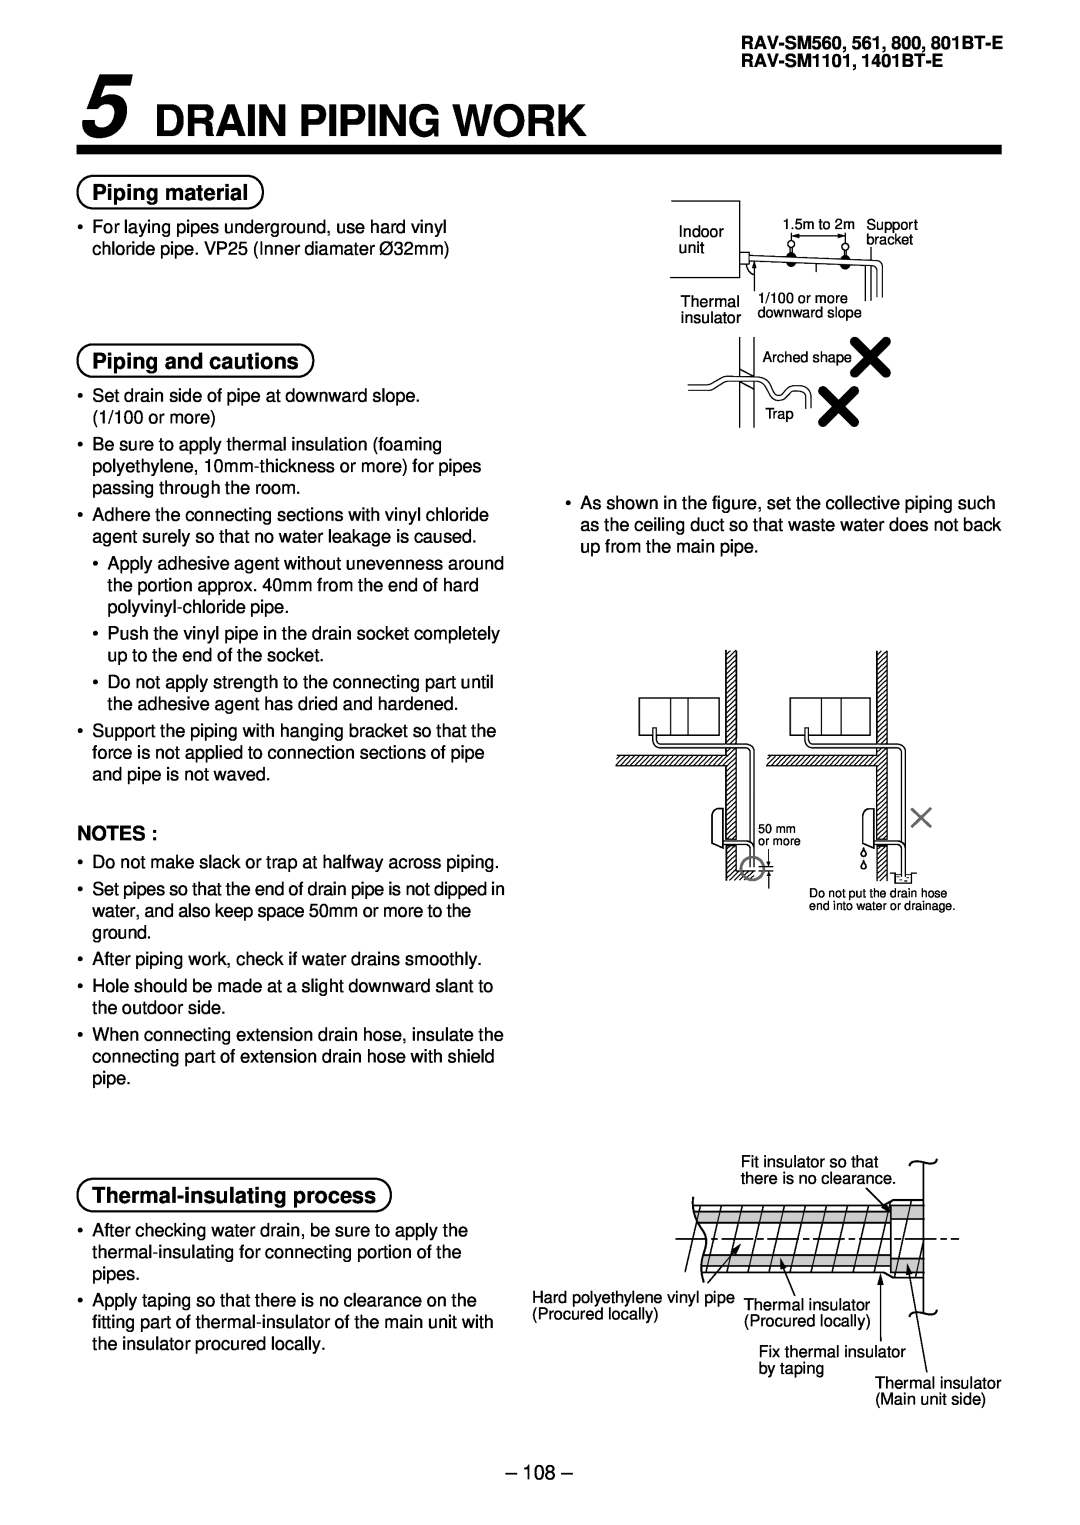 Balcar R410A service manual Drain Piping Work, Piping material, Piping and cautions, Thermal-insulatingprocess, Notes, 108 